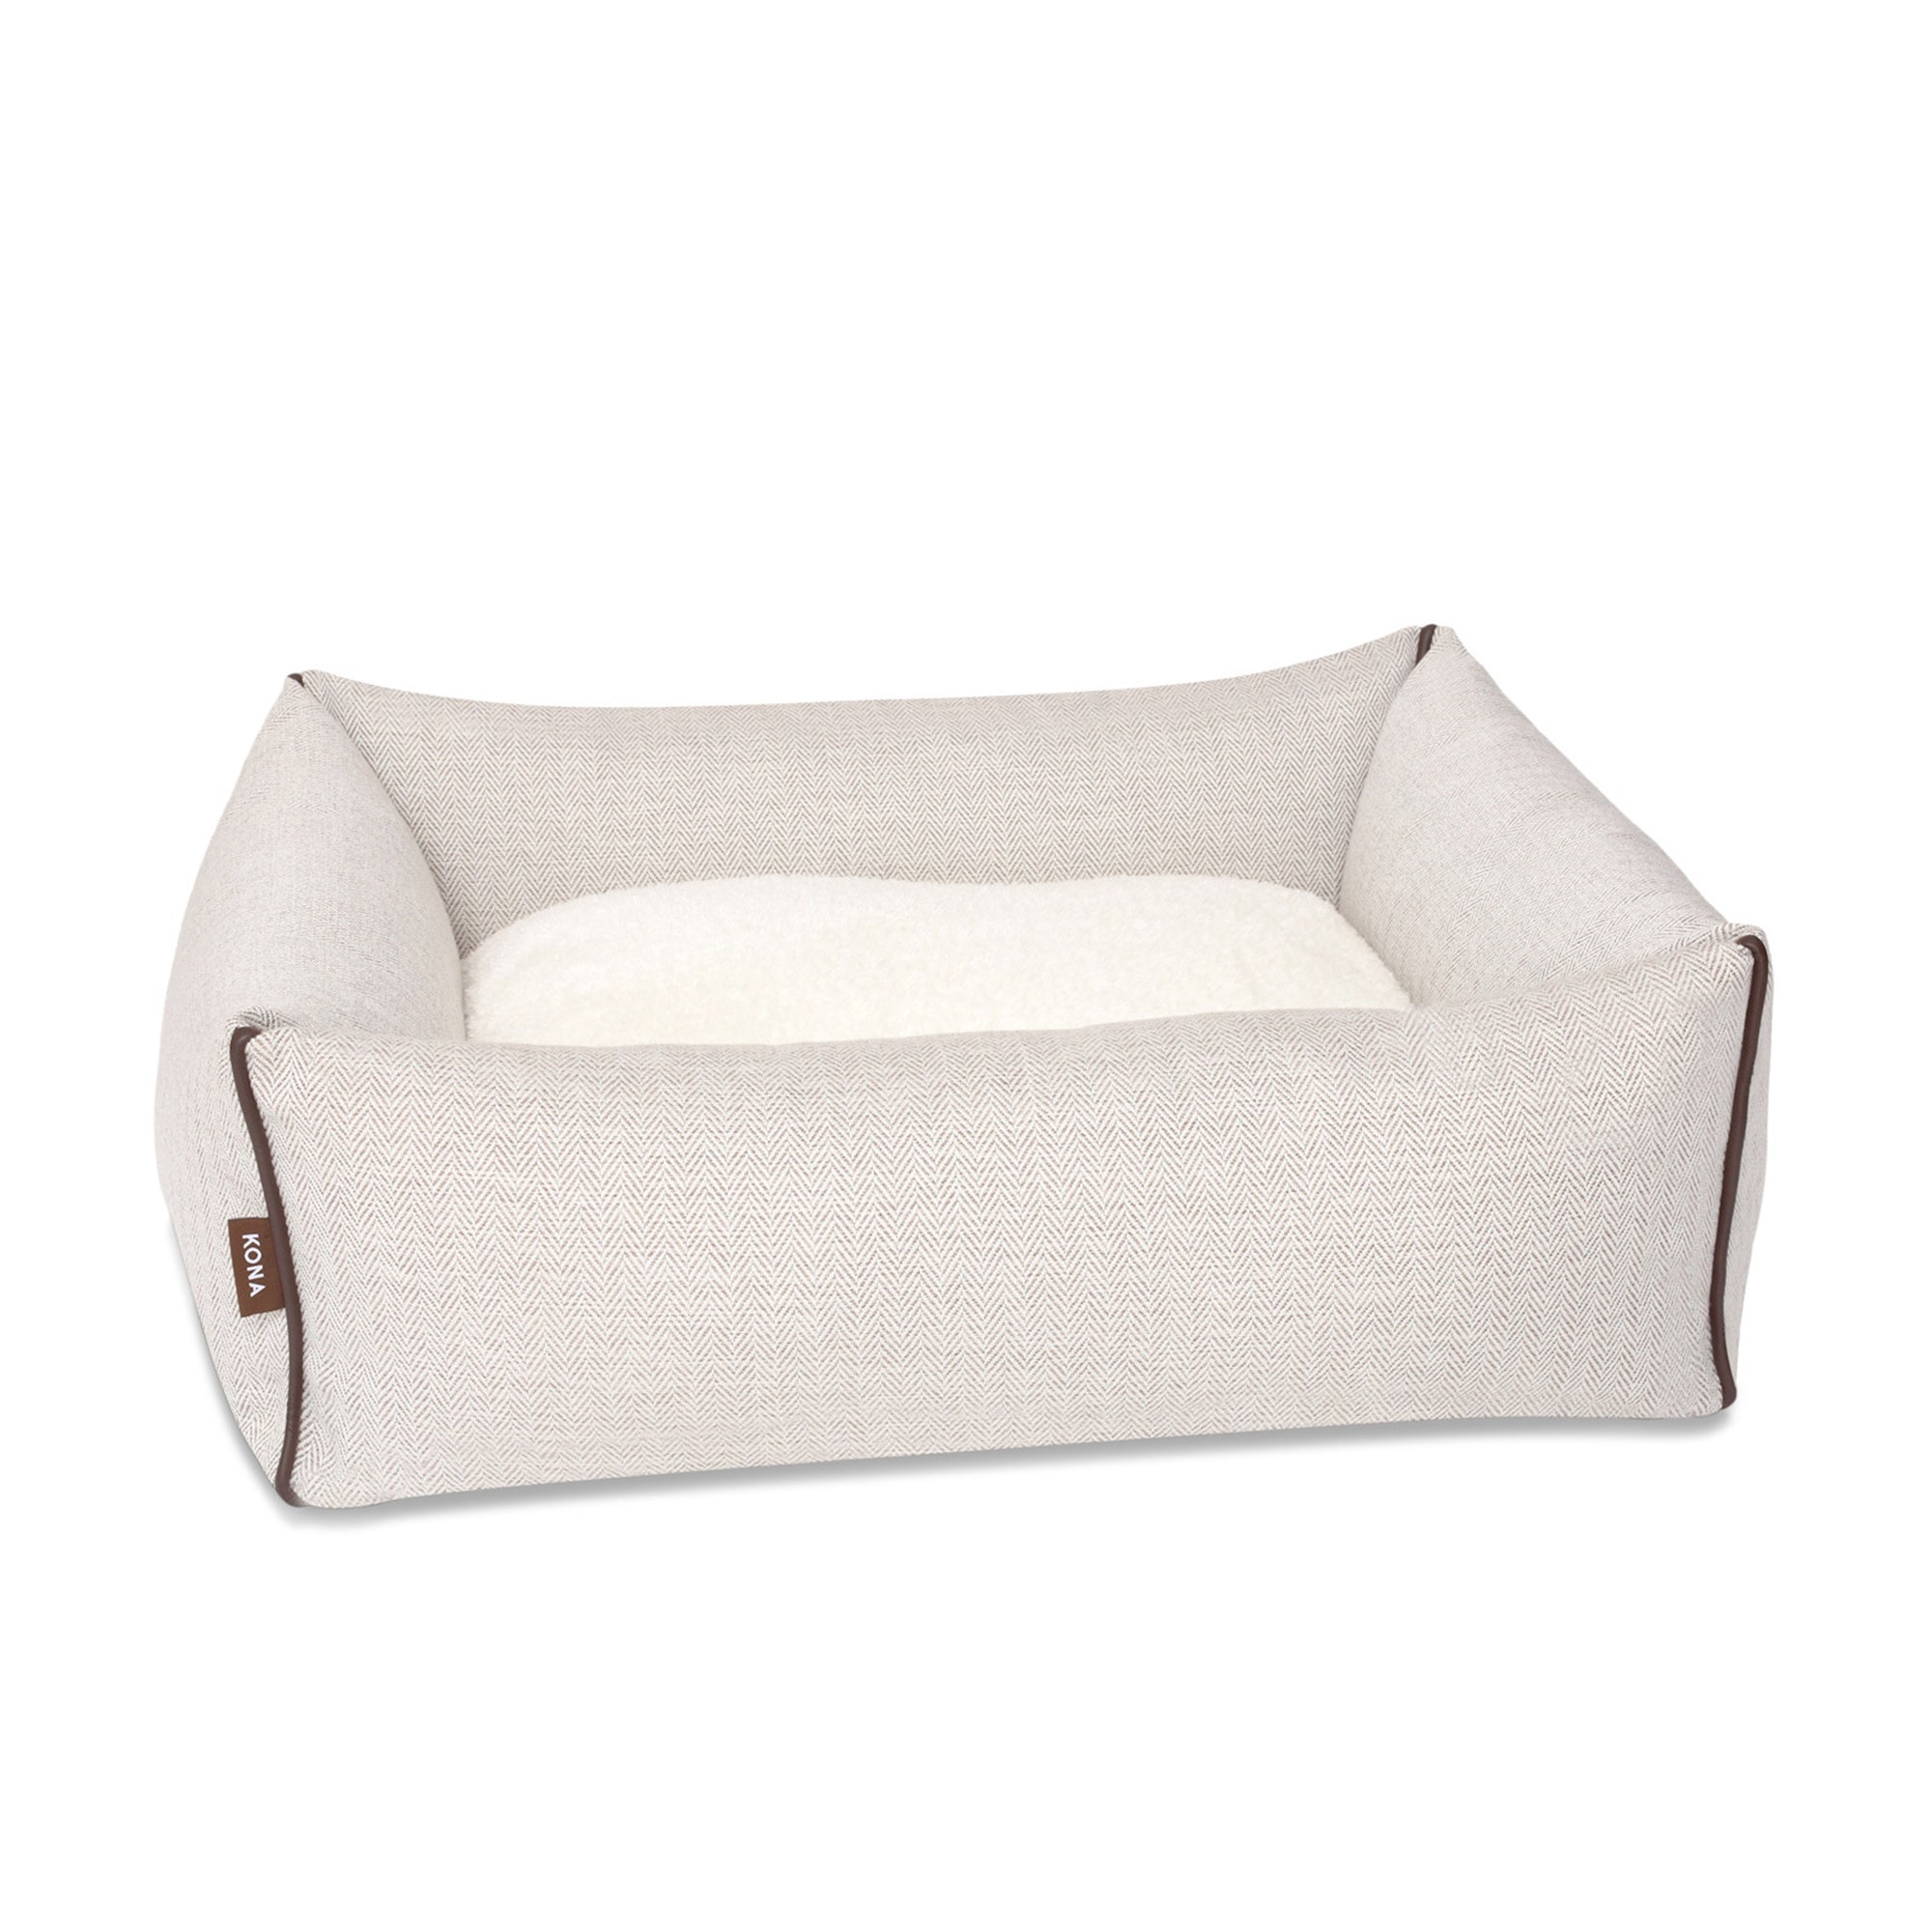 KONA CAVE® luxury bolster dog bed in elegant cream herringbone fabric with leather trim